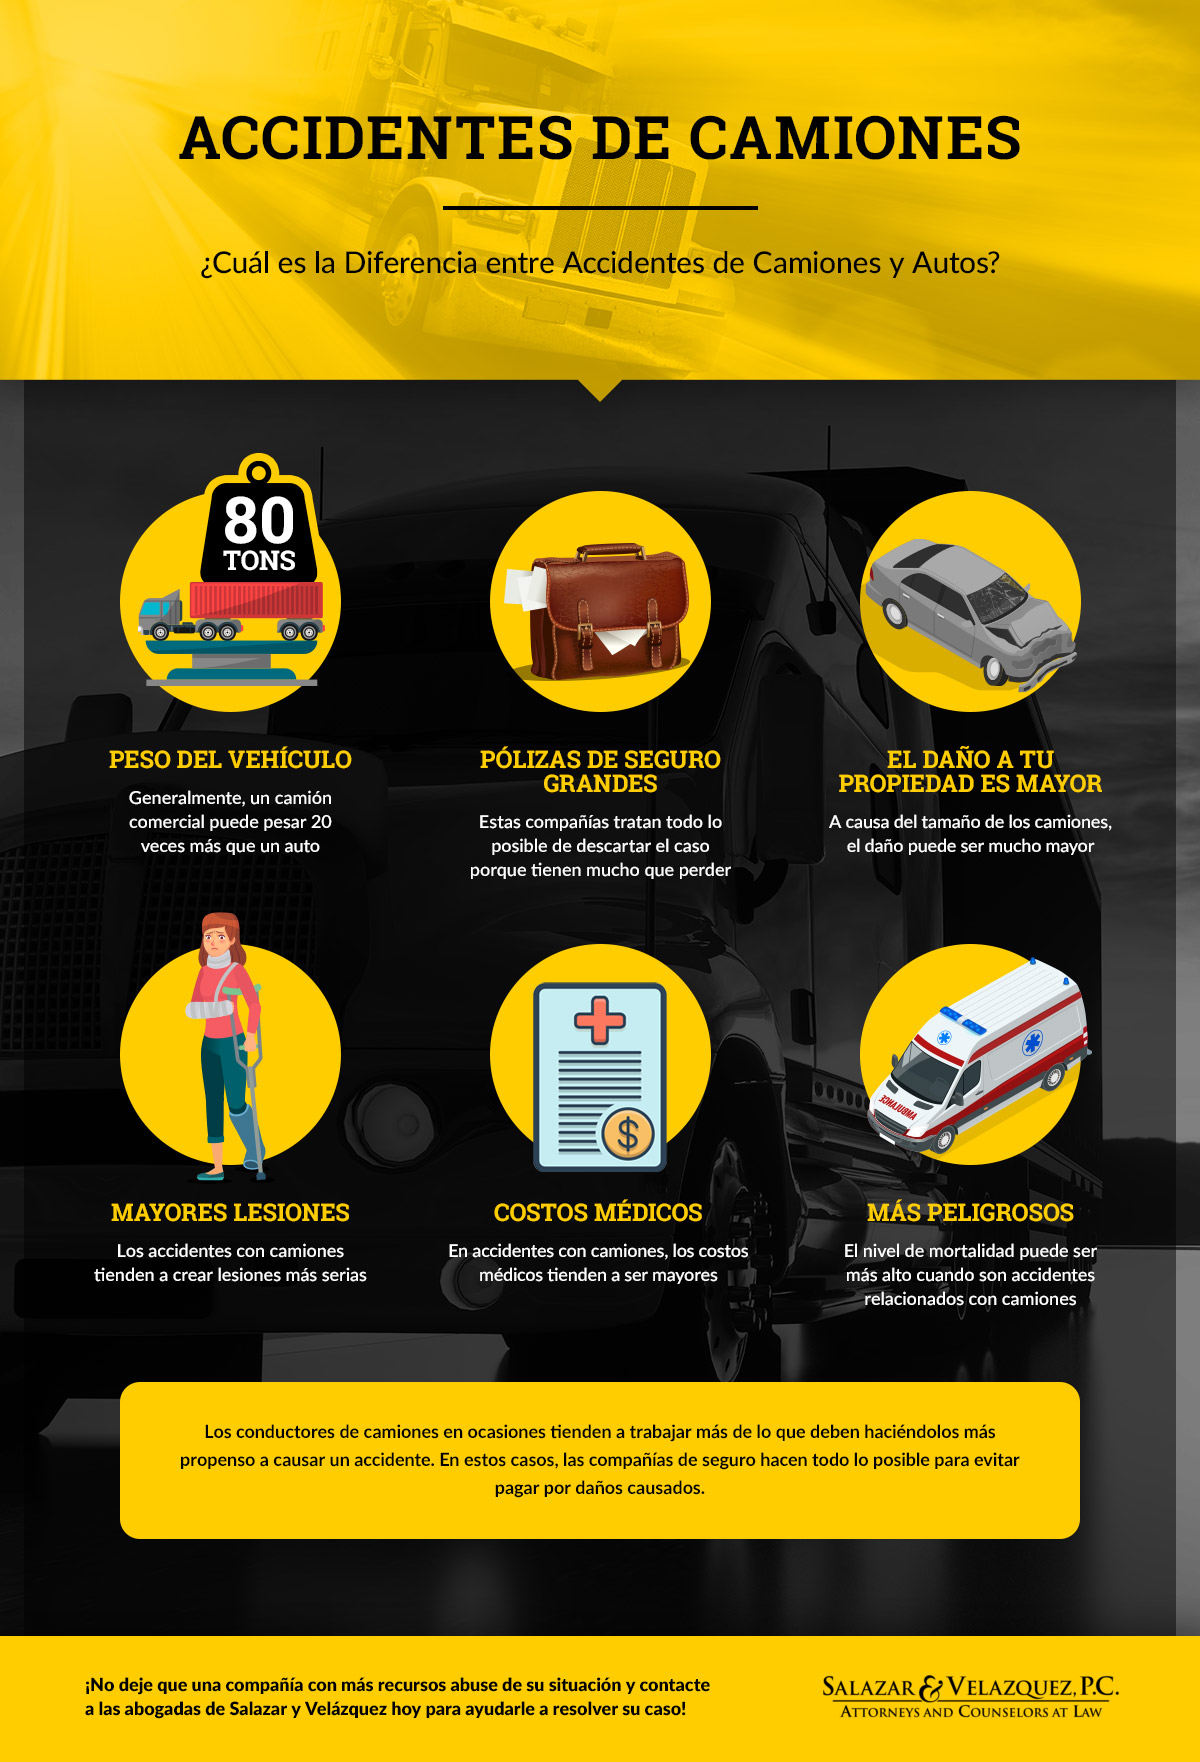 Accidentes de Camiones infographic